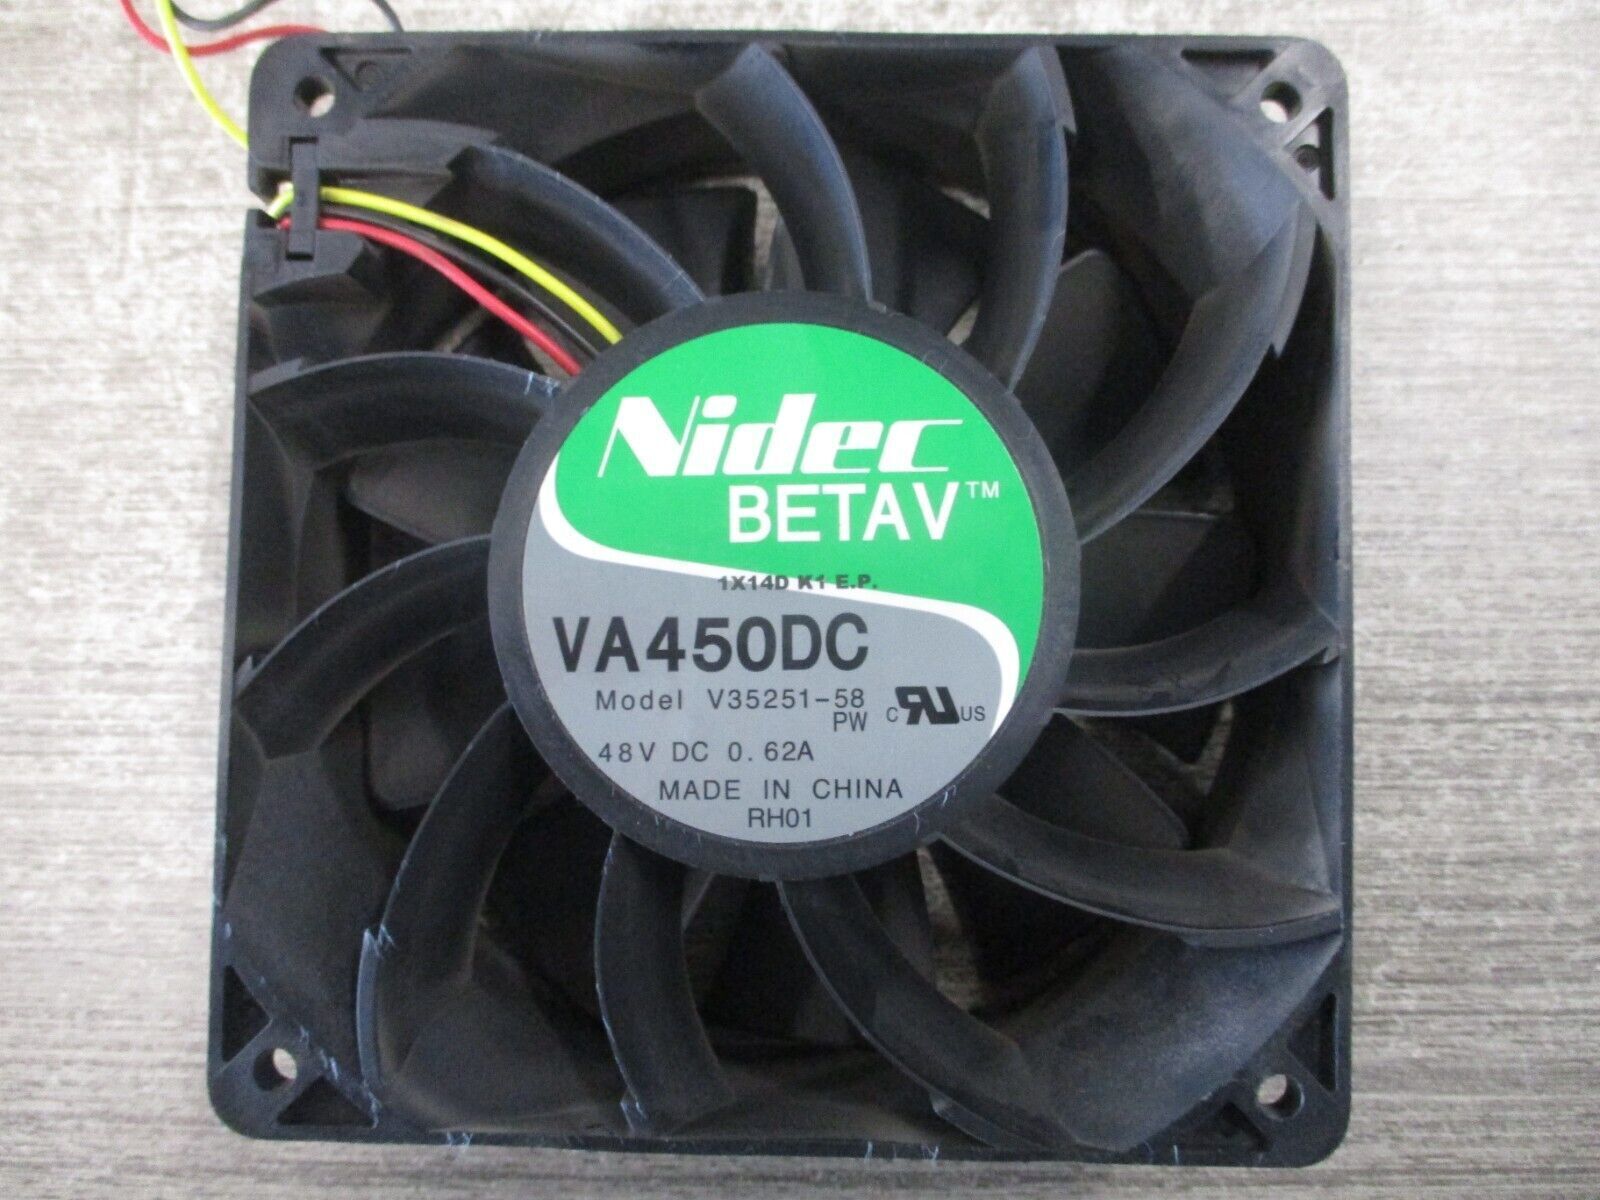 Nidec Beta V Axial Fan VA450DC 48VDC 0.62A Used